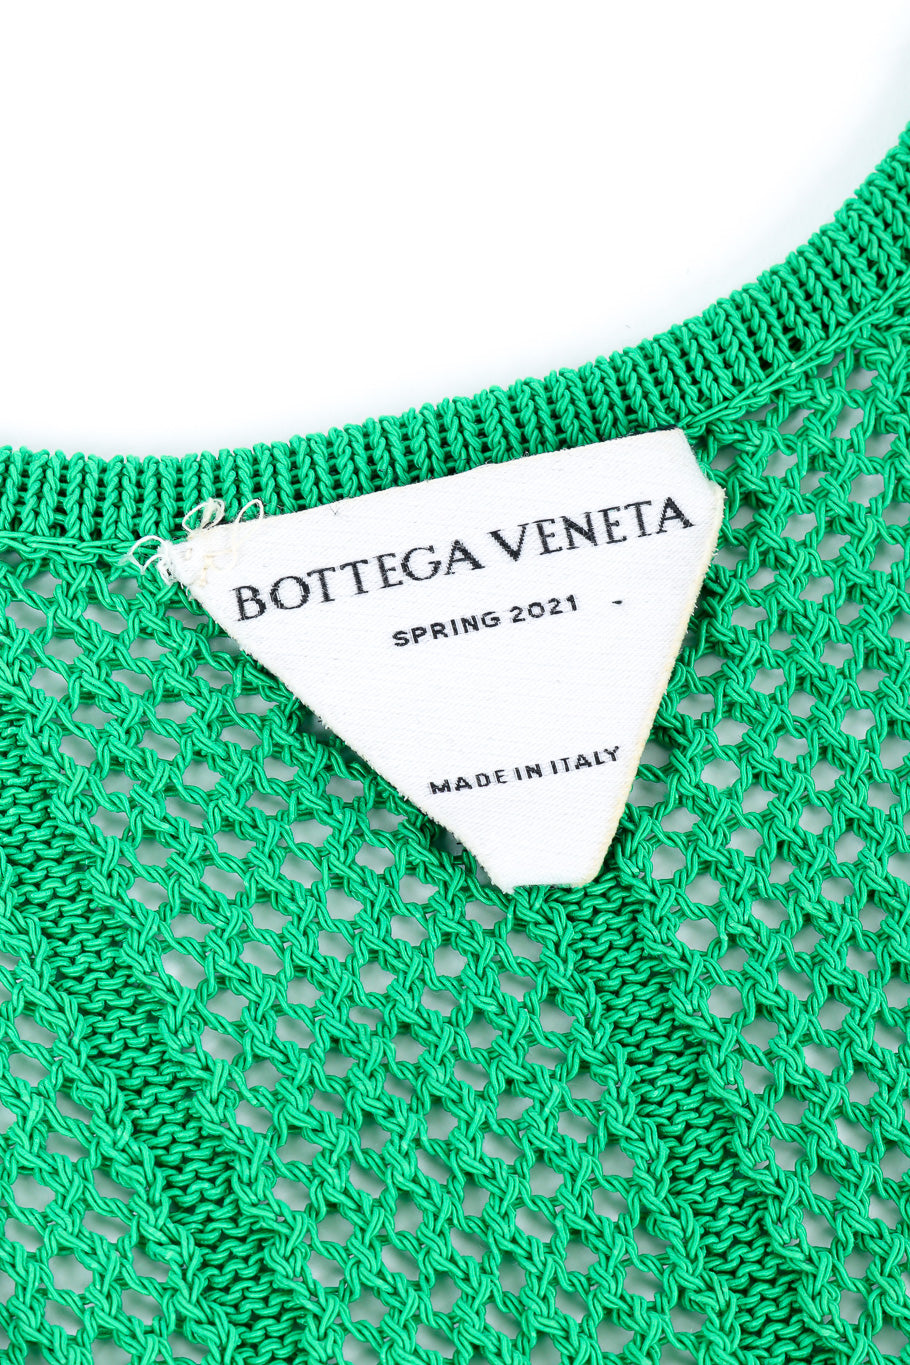 Mesh dress by Bottega Veneta flat lay label @recessla